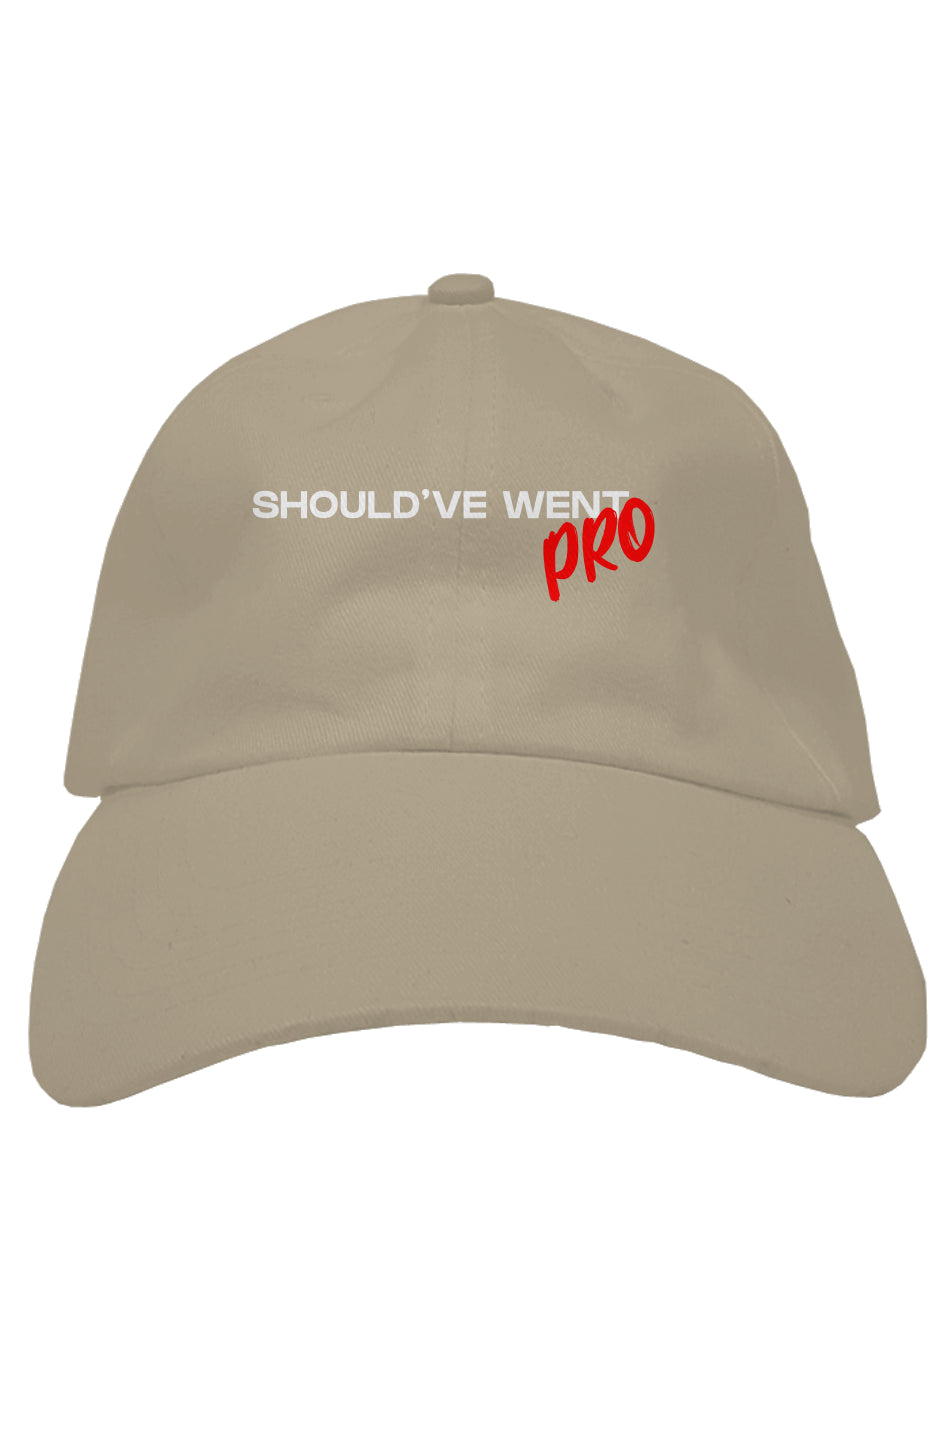 Righteous went pro premium adjustable dad hat